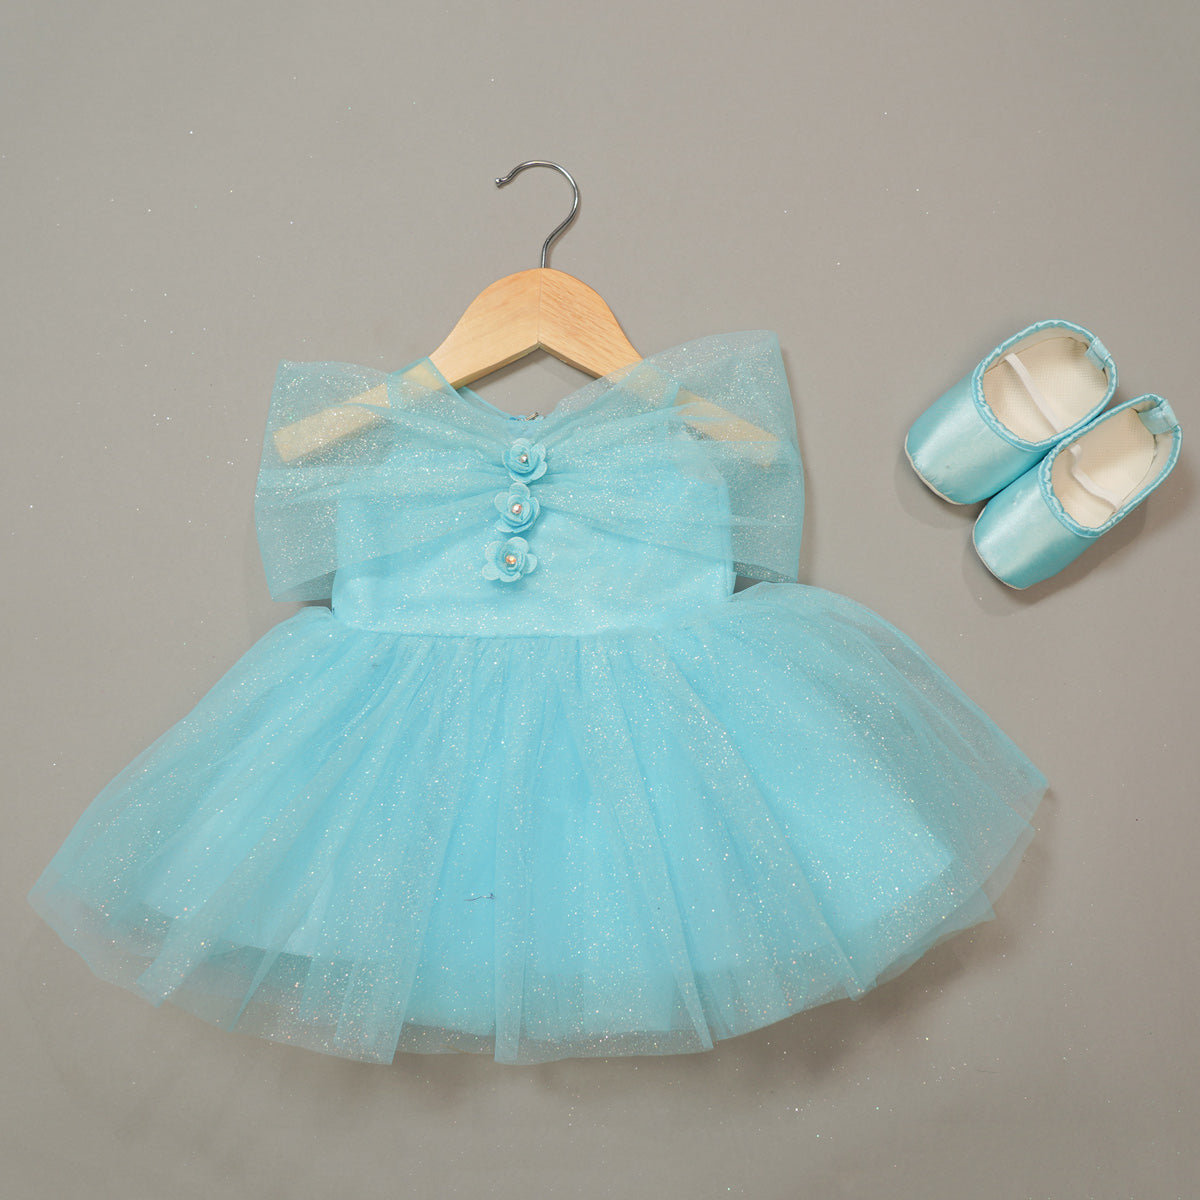 Best Party Wear Dresses For Kids: Make Them Look Cute And Stylish |  HerZindagi